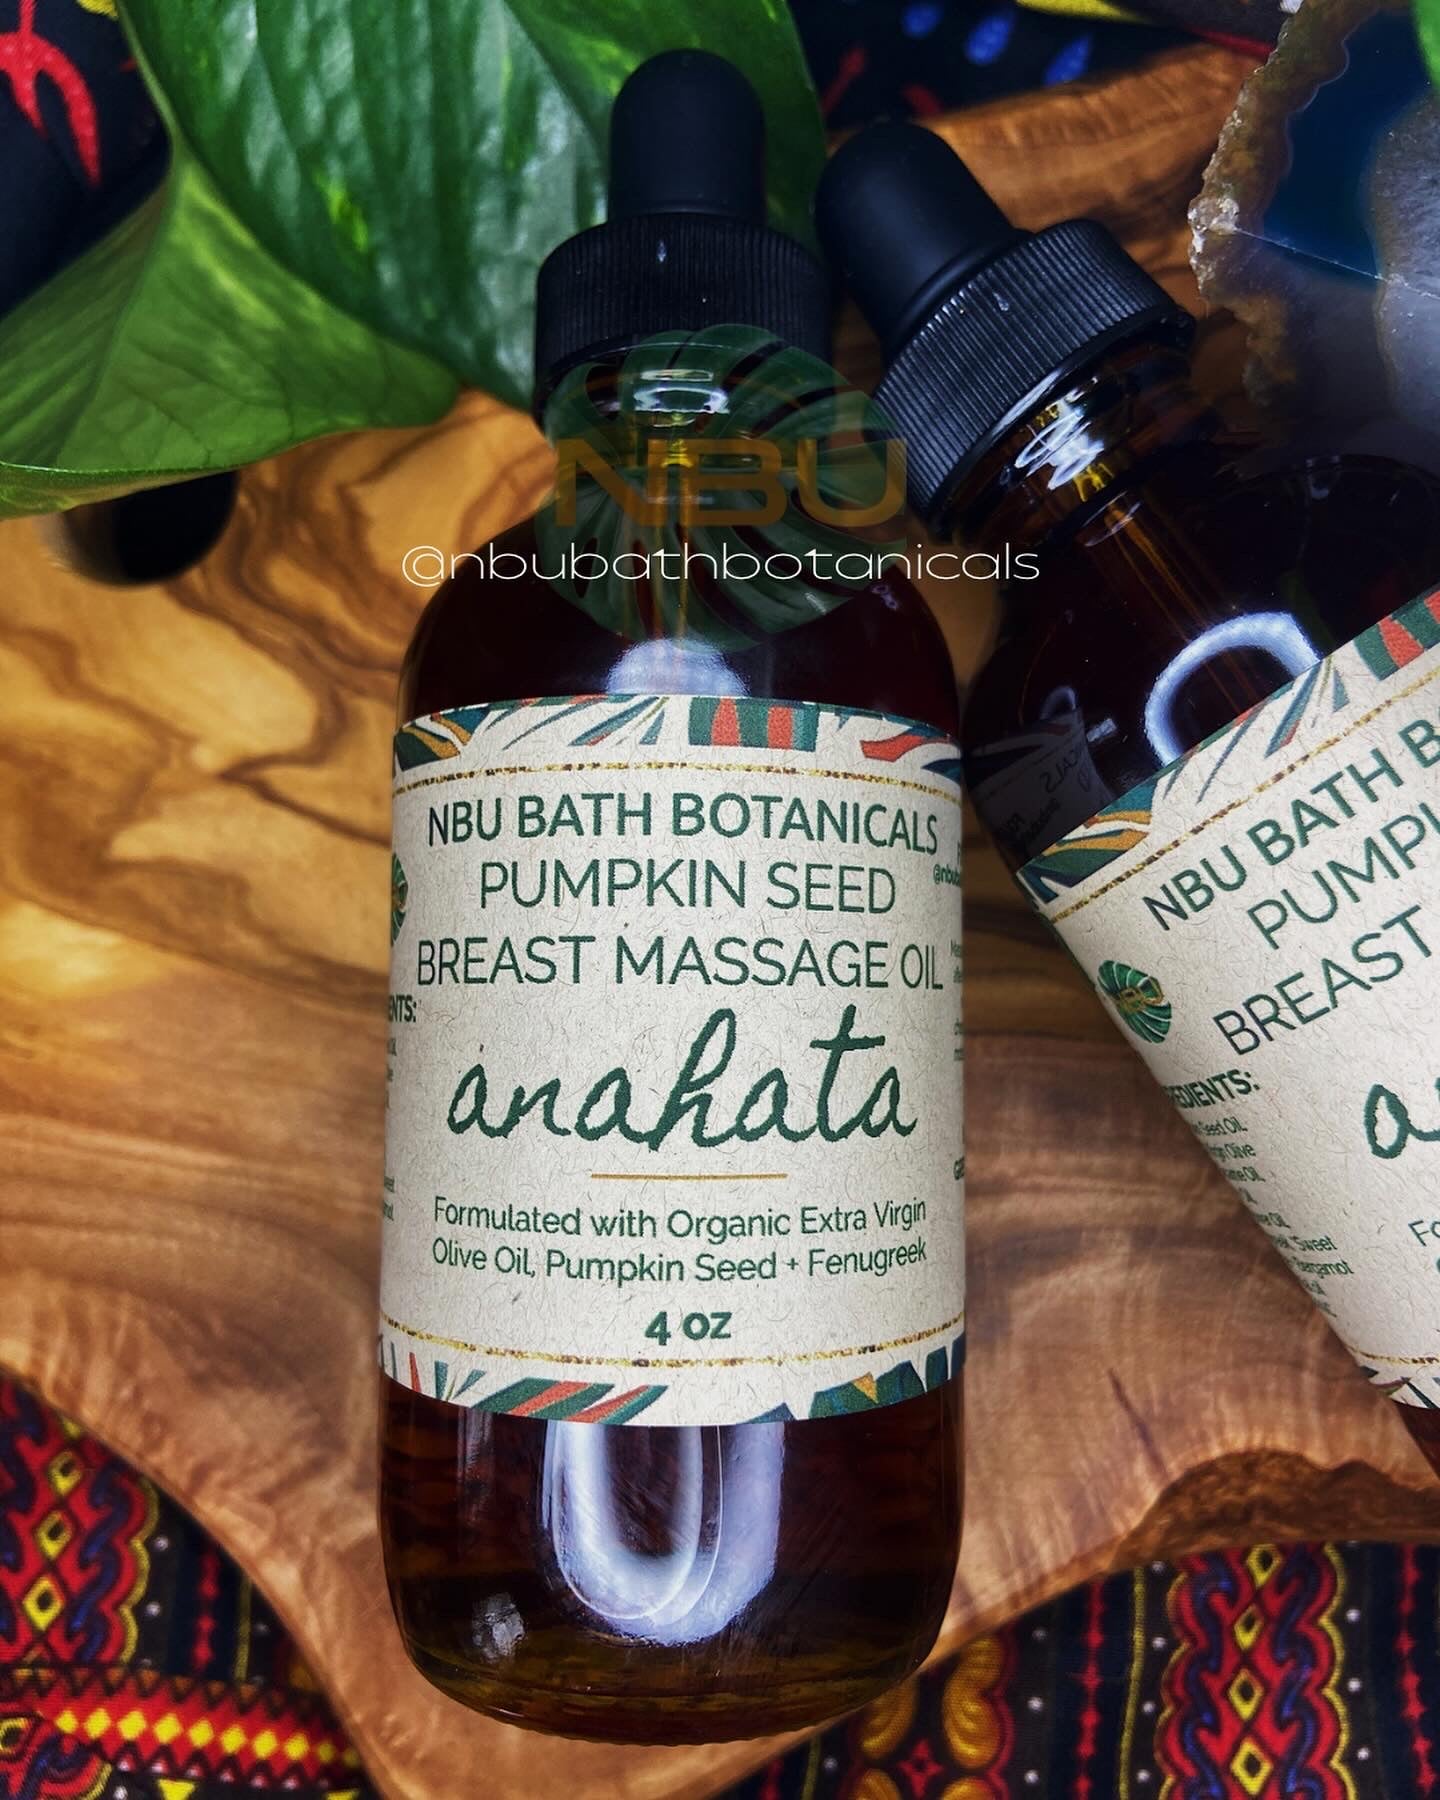 Pumpkin Seed Breast Massage Oil • ANAHATA